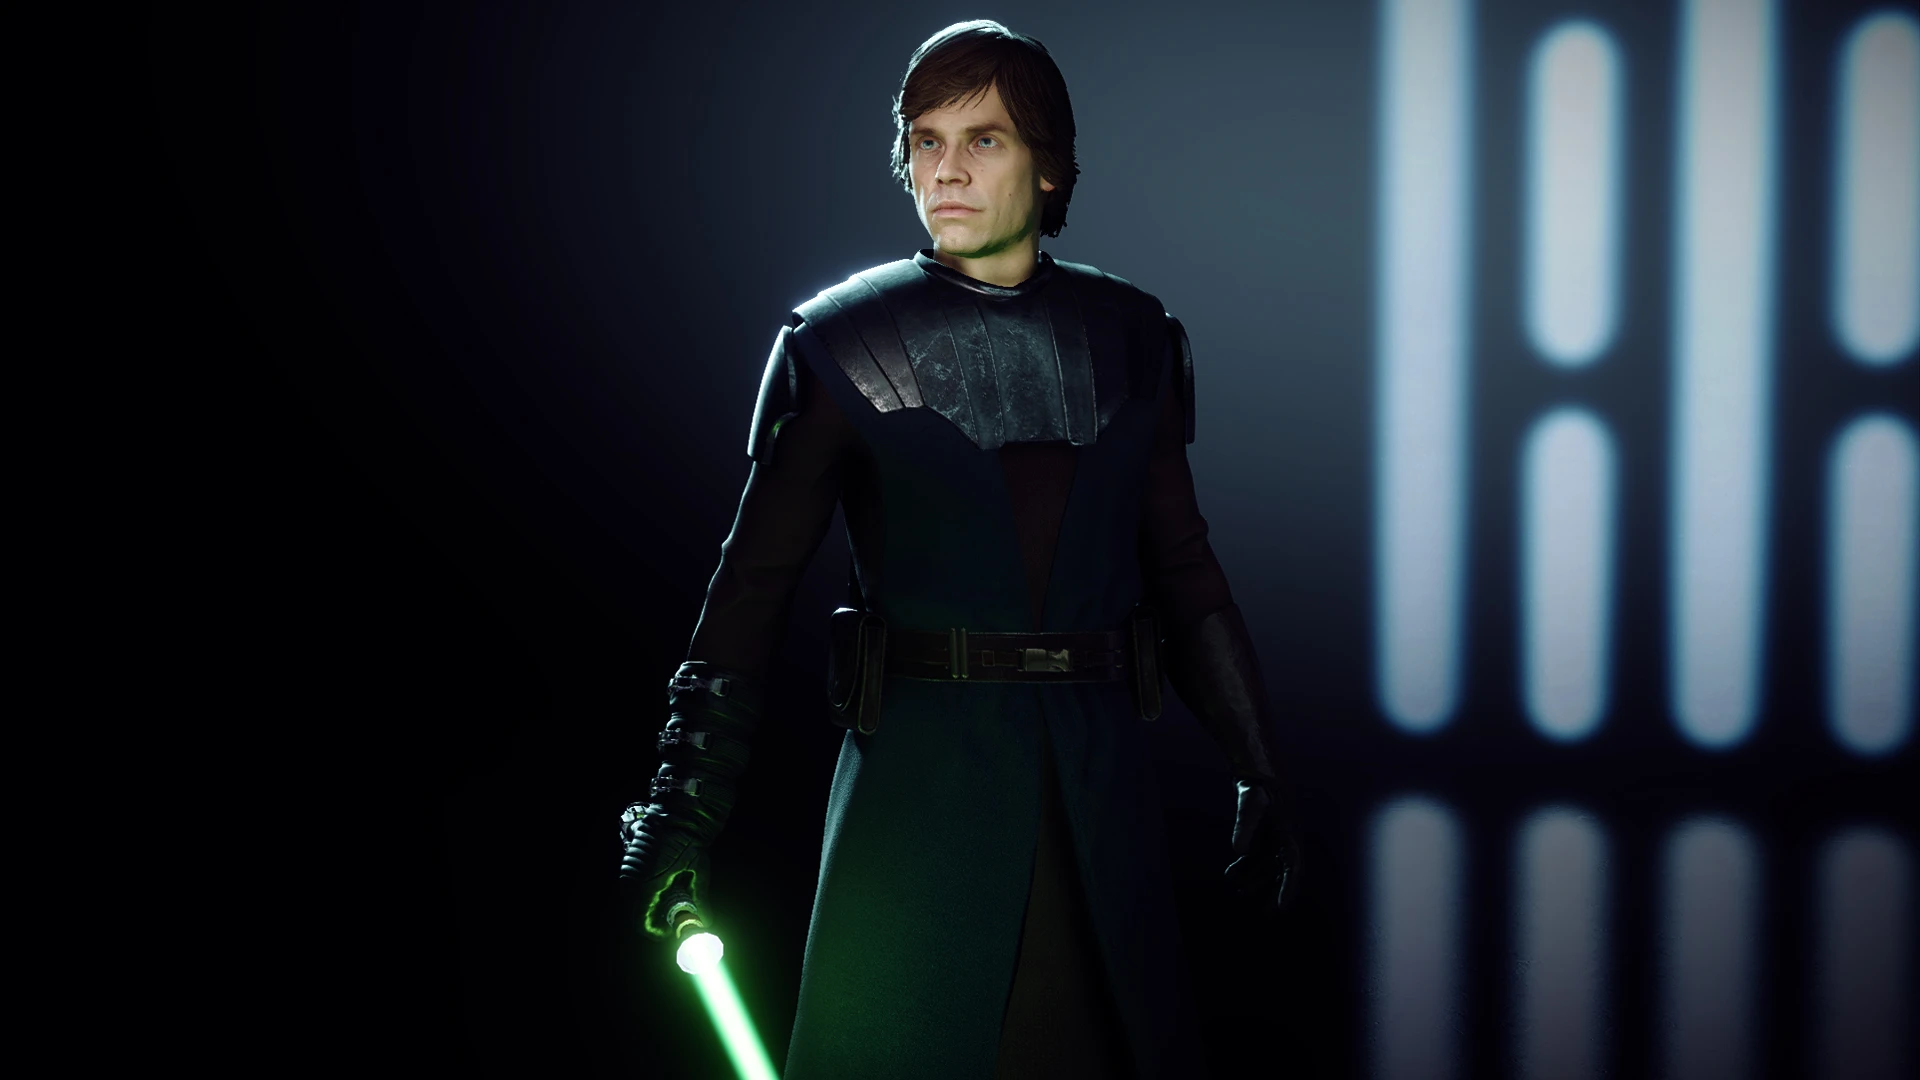 General Luke Skywalker Skins At Star Wars Battlefront II 2017 Nexus.